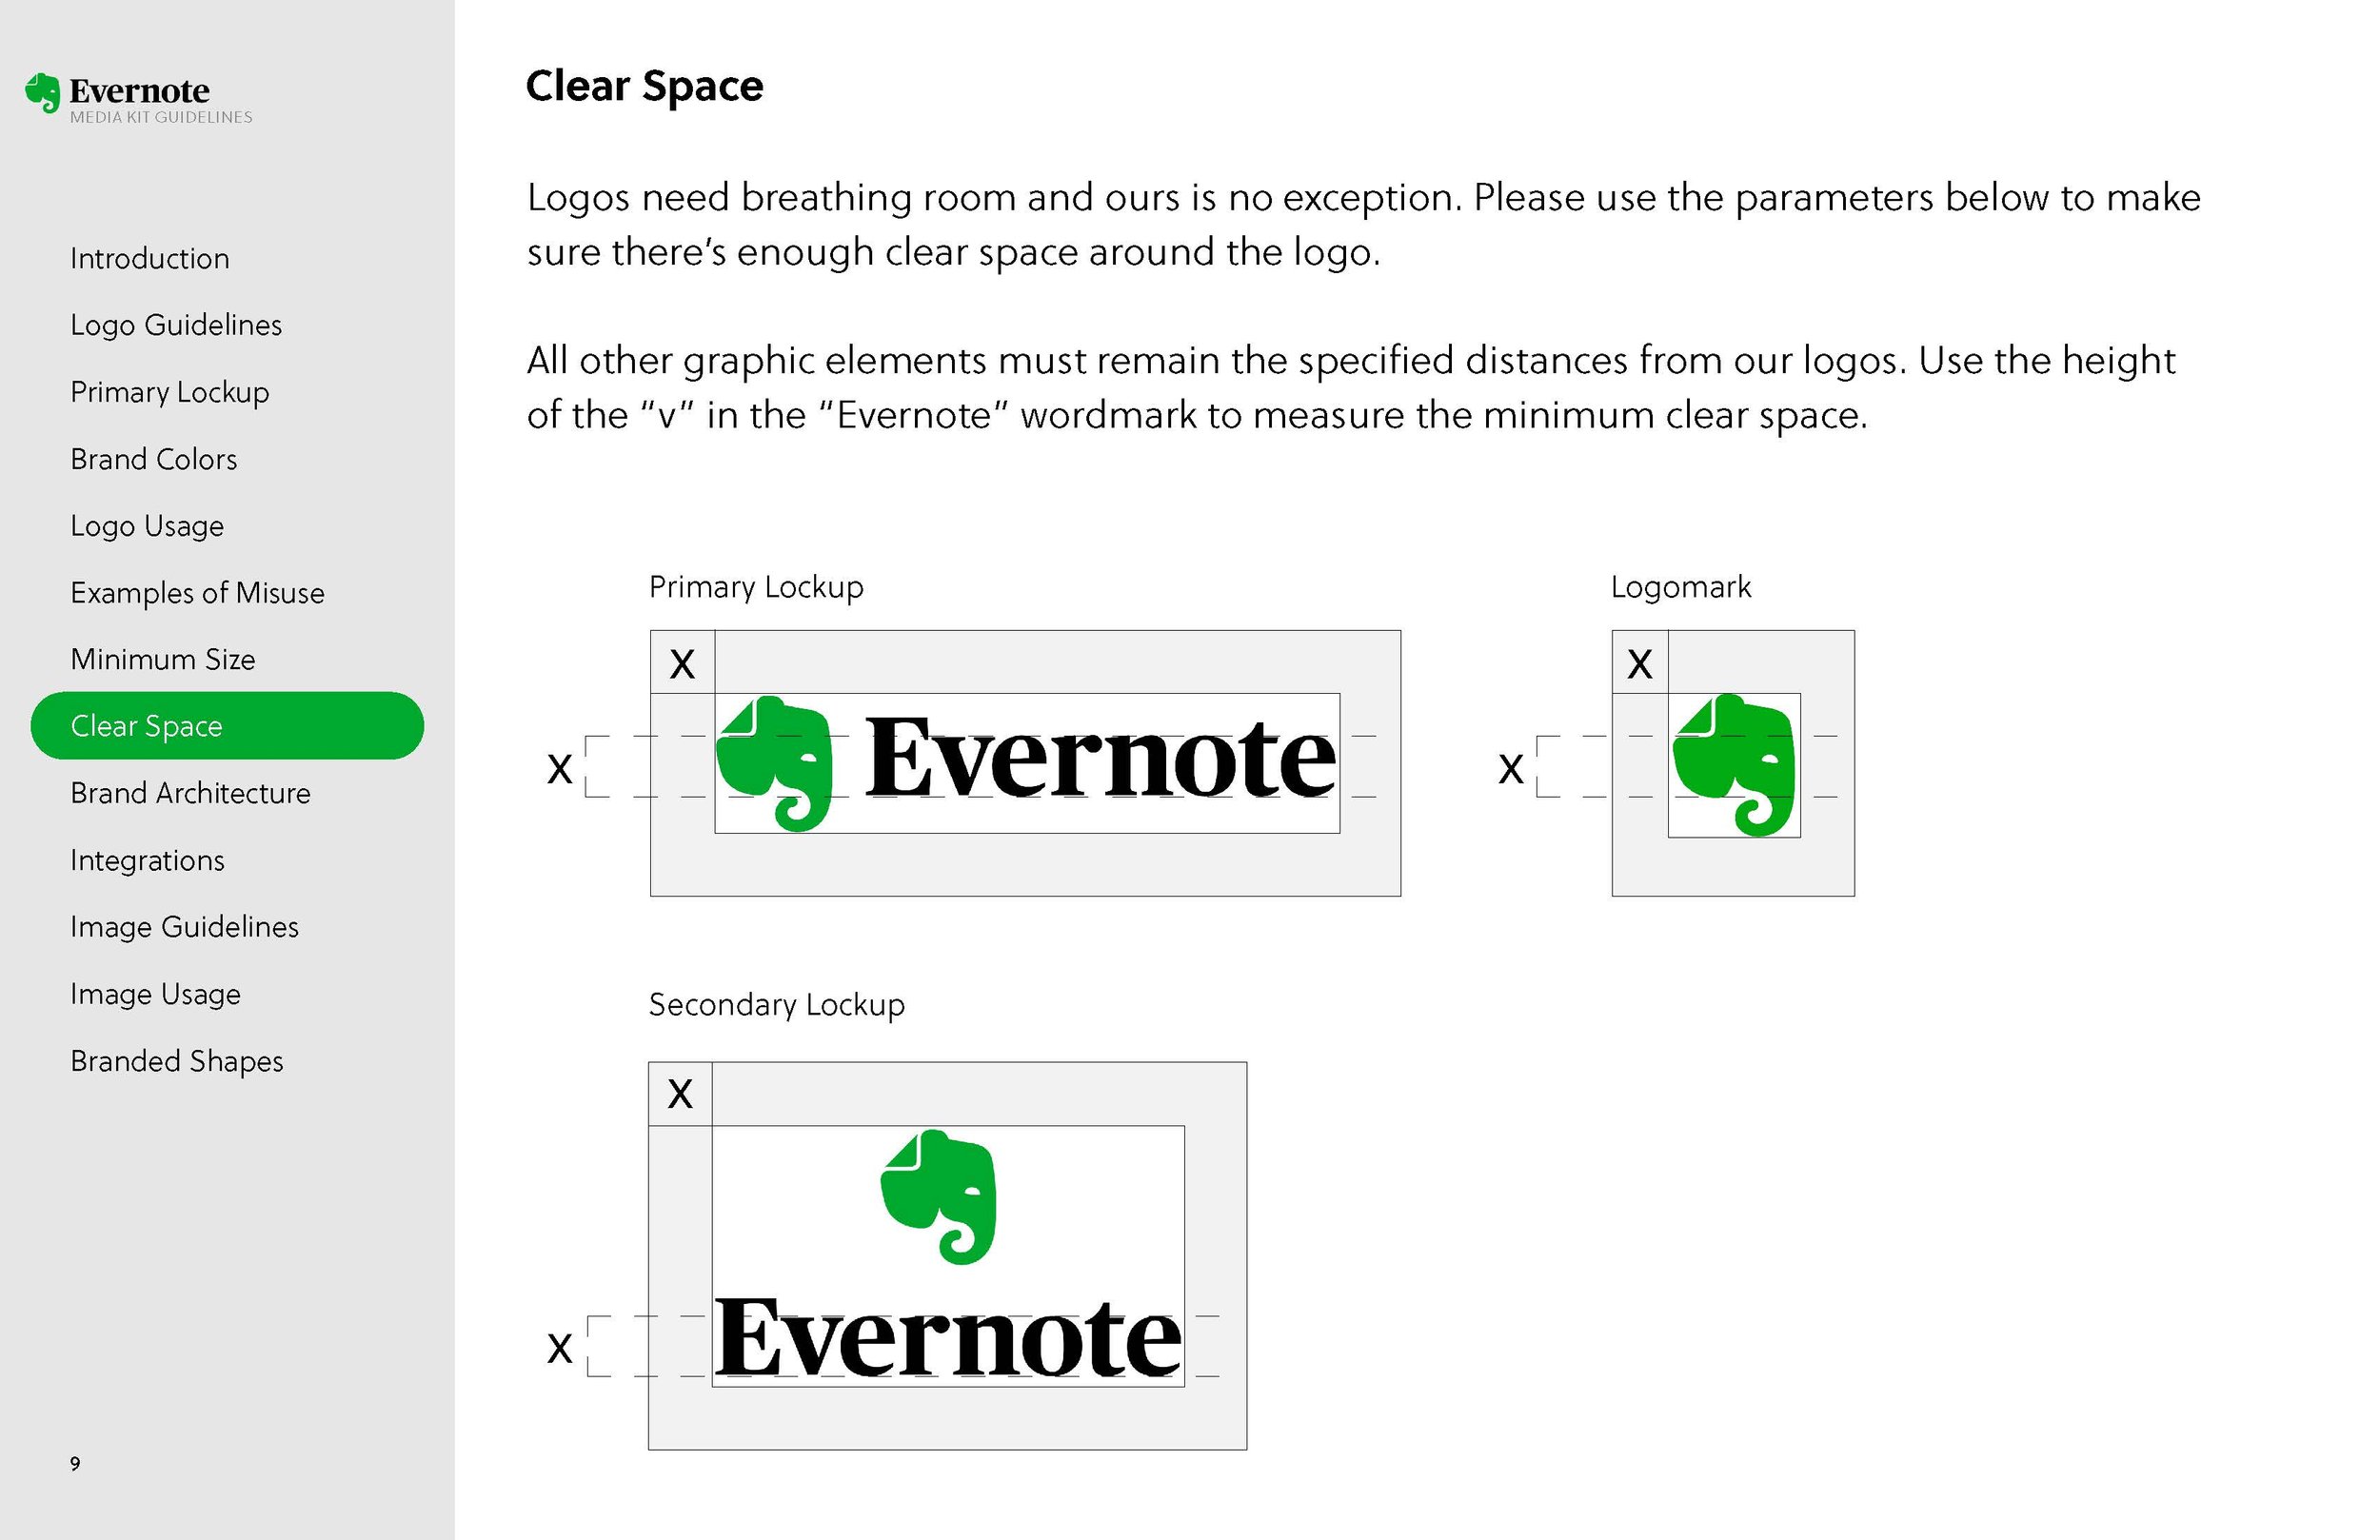 Evernote_Media_Kit_3_31_22_final_Page_09.jpg